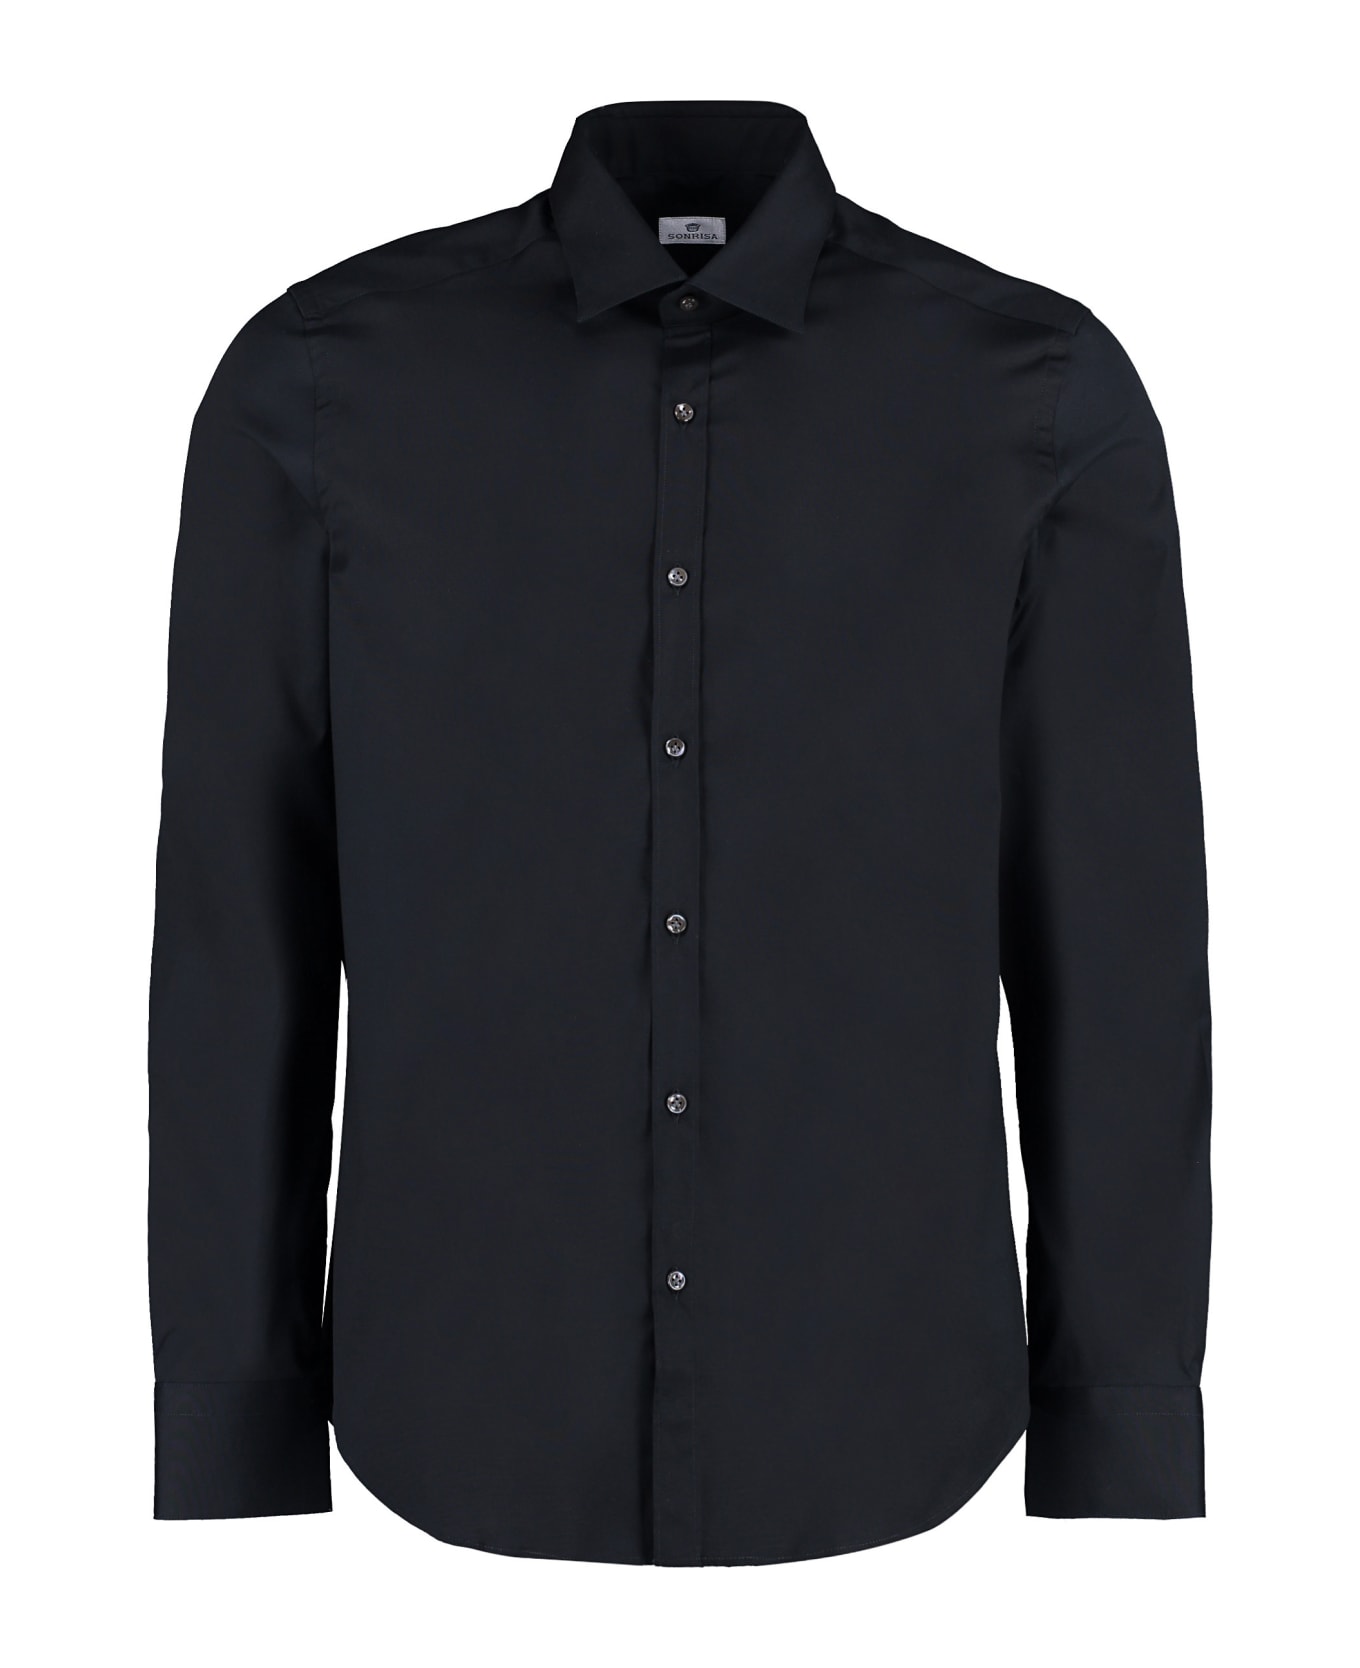 Sonrisa Long Sleeve Stretch Cotton Shirt - black